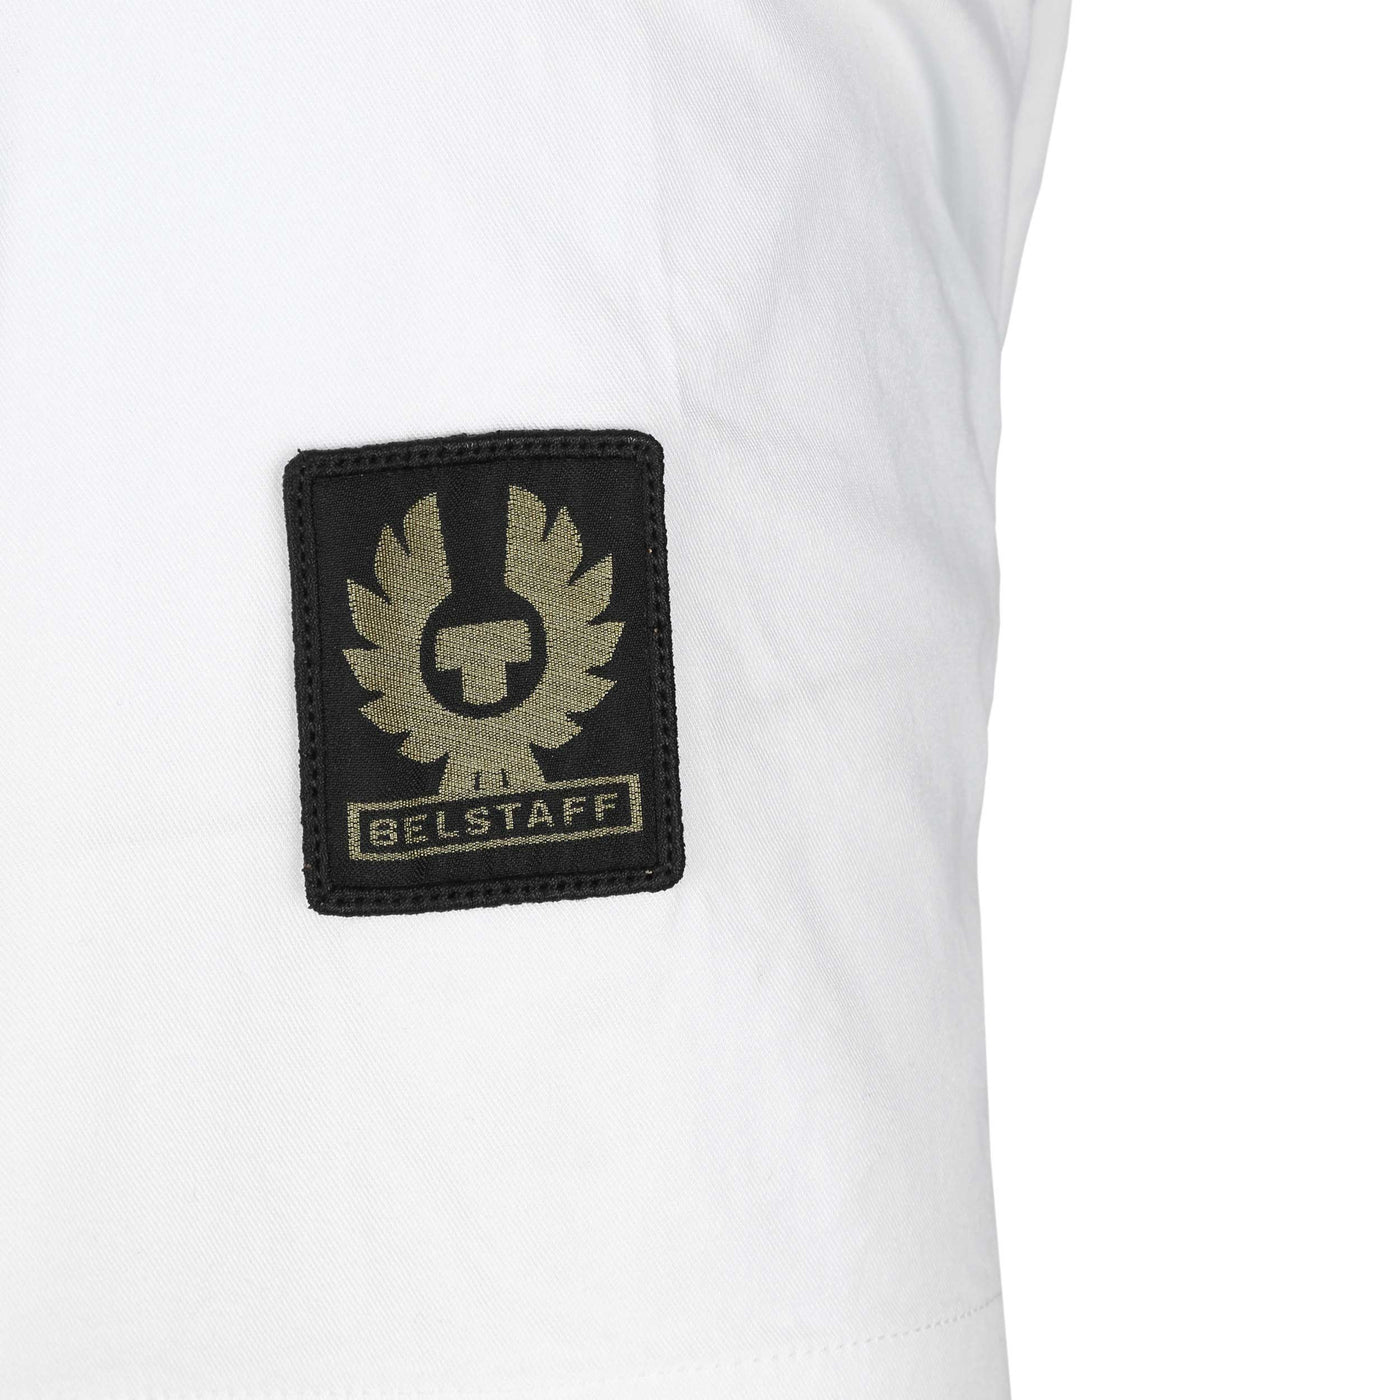 Belstaff SS Pitch Shirt in White